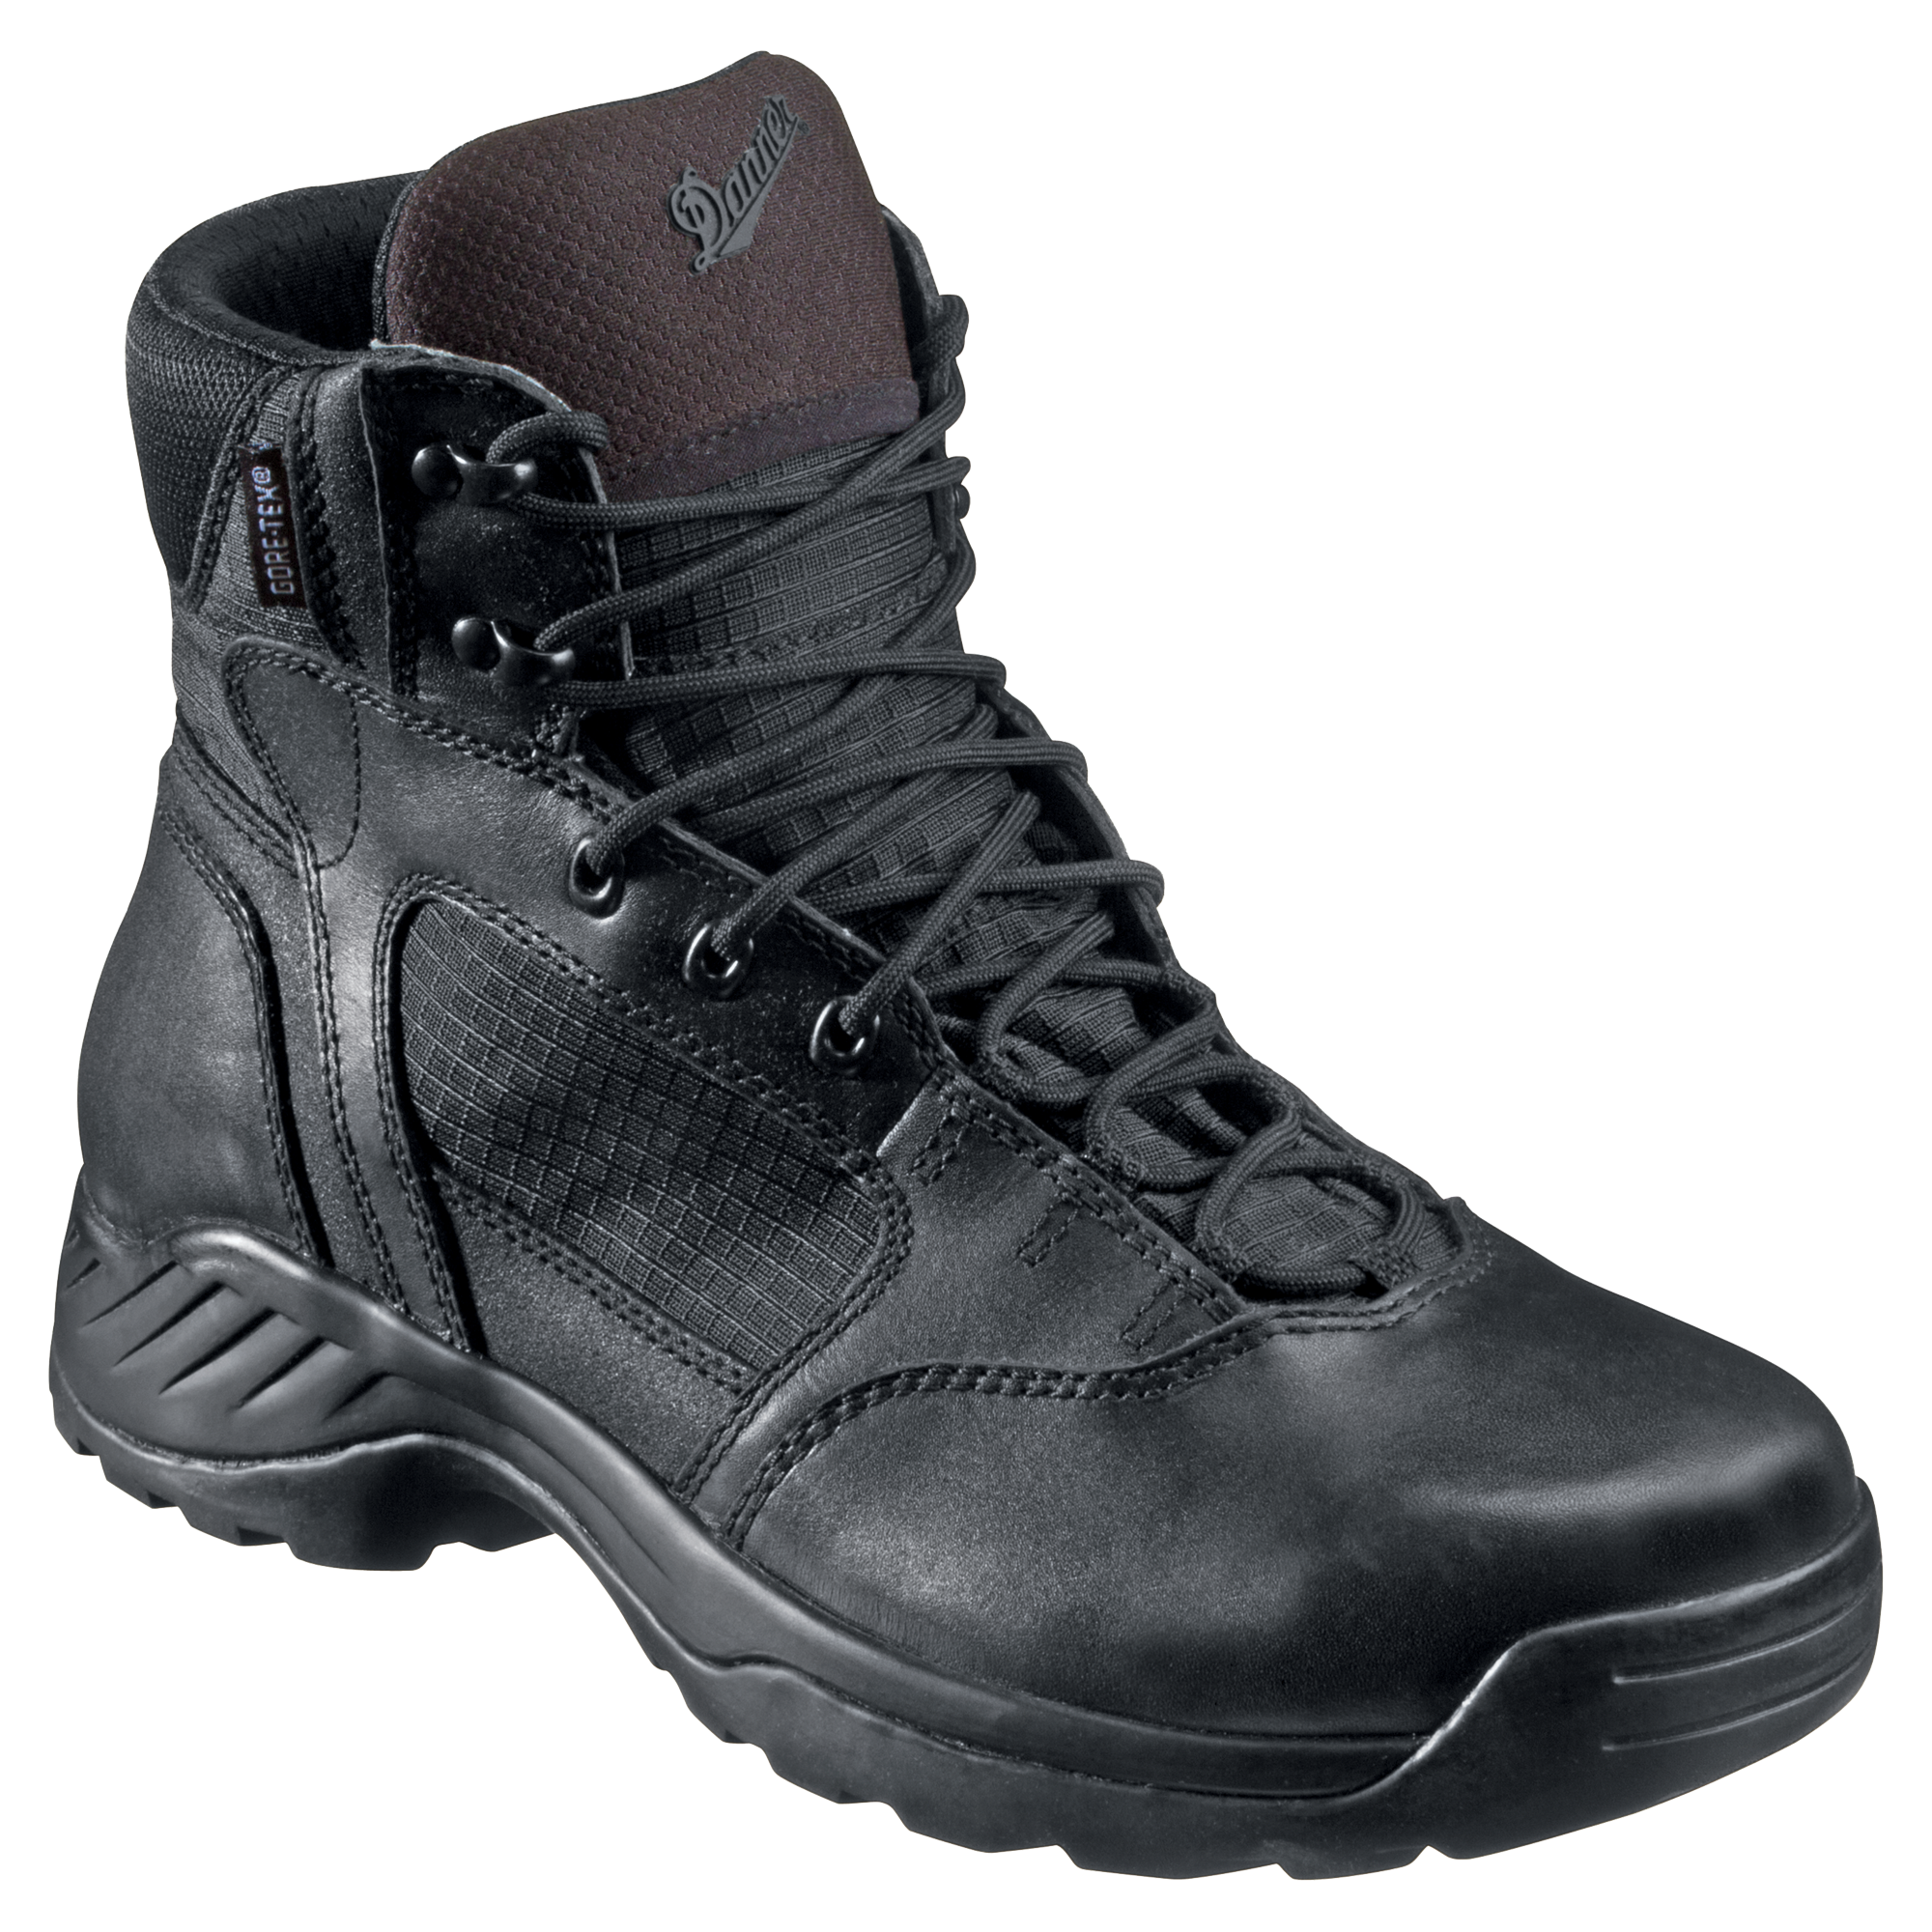 Danner Kinetic GTX 6'' Side-Zip Waterproof Tactical Duty Boots for Men - Black - 6M